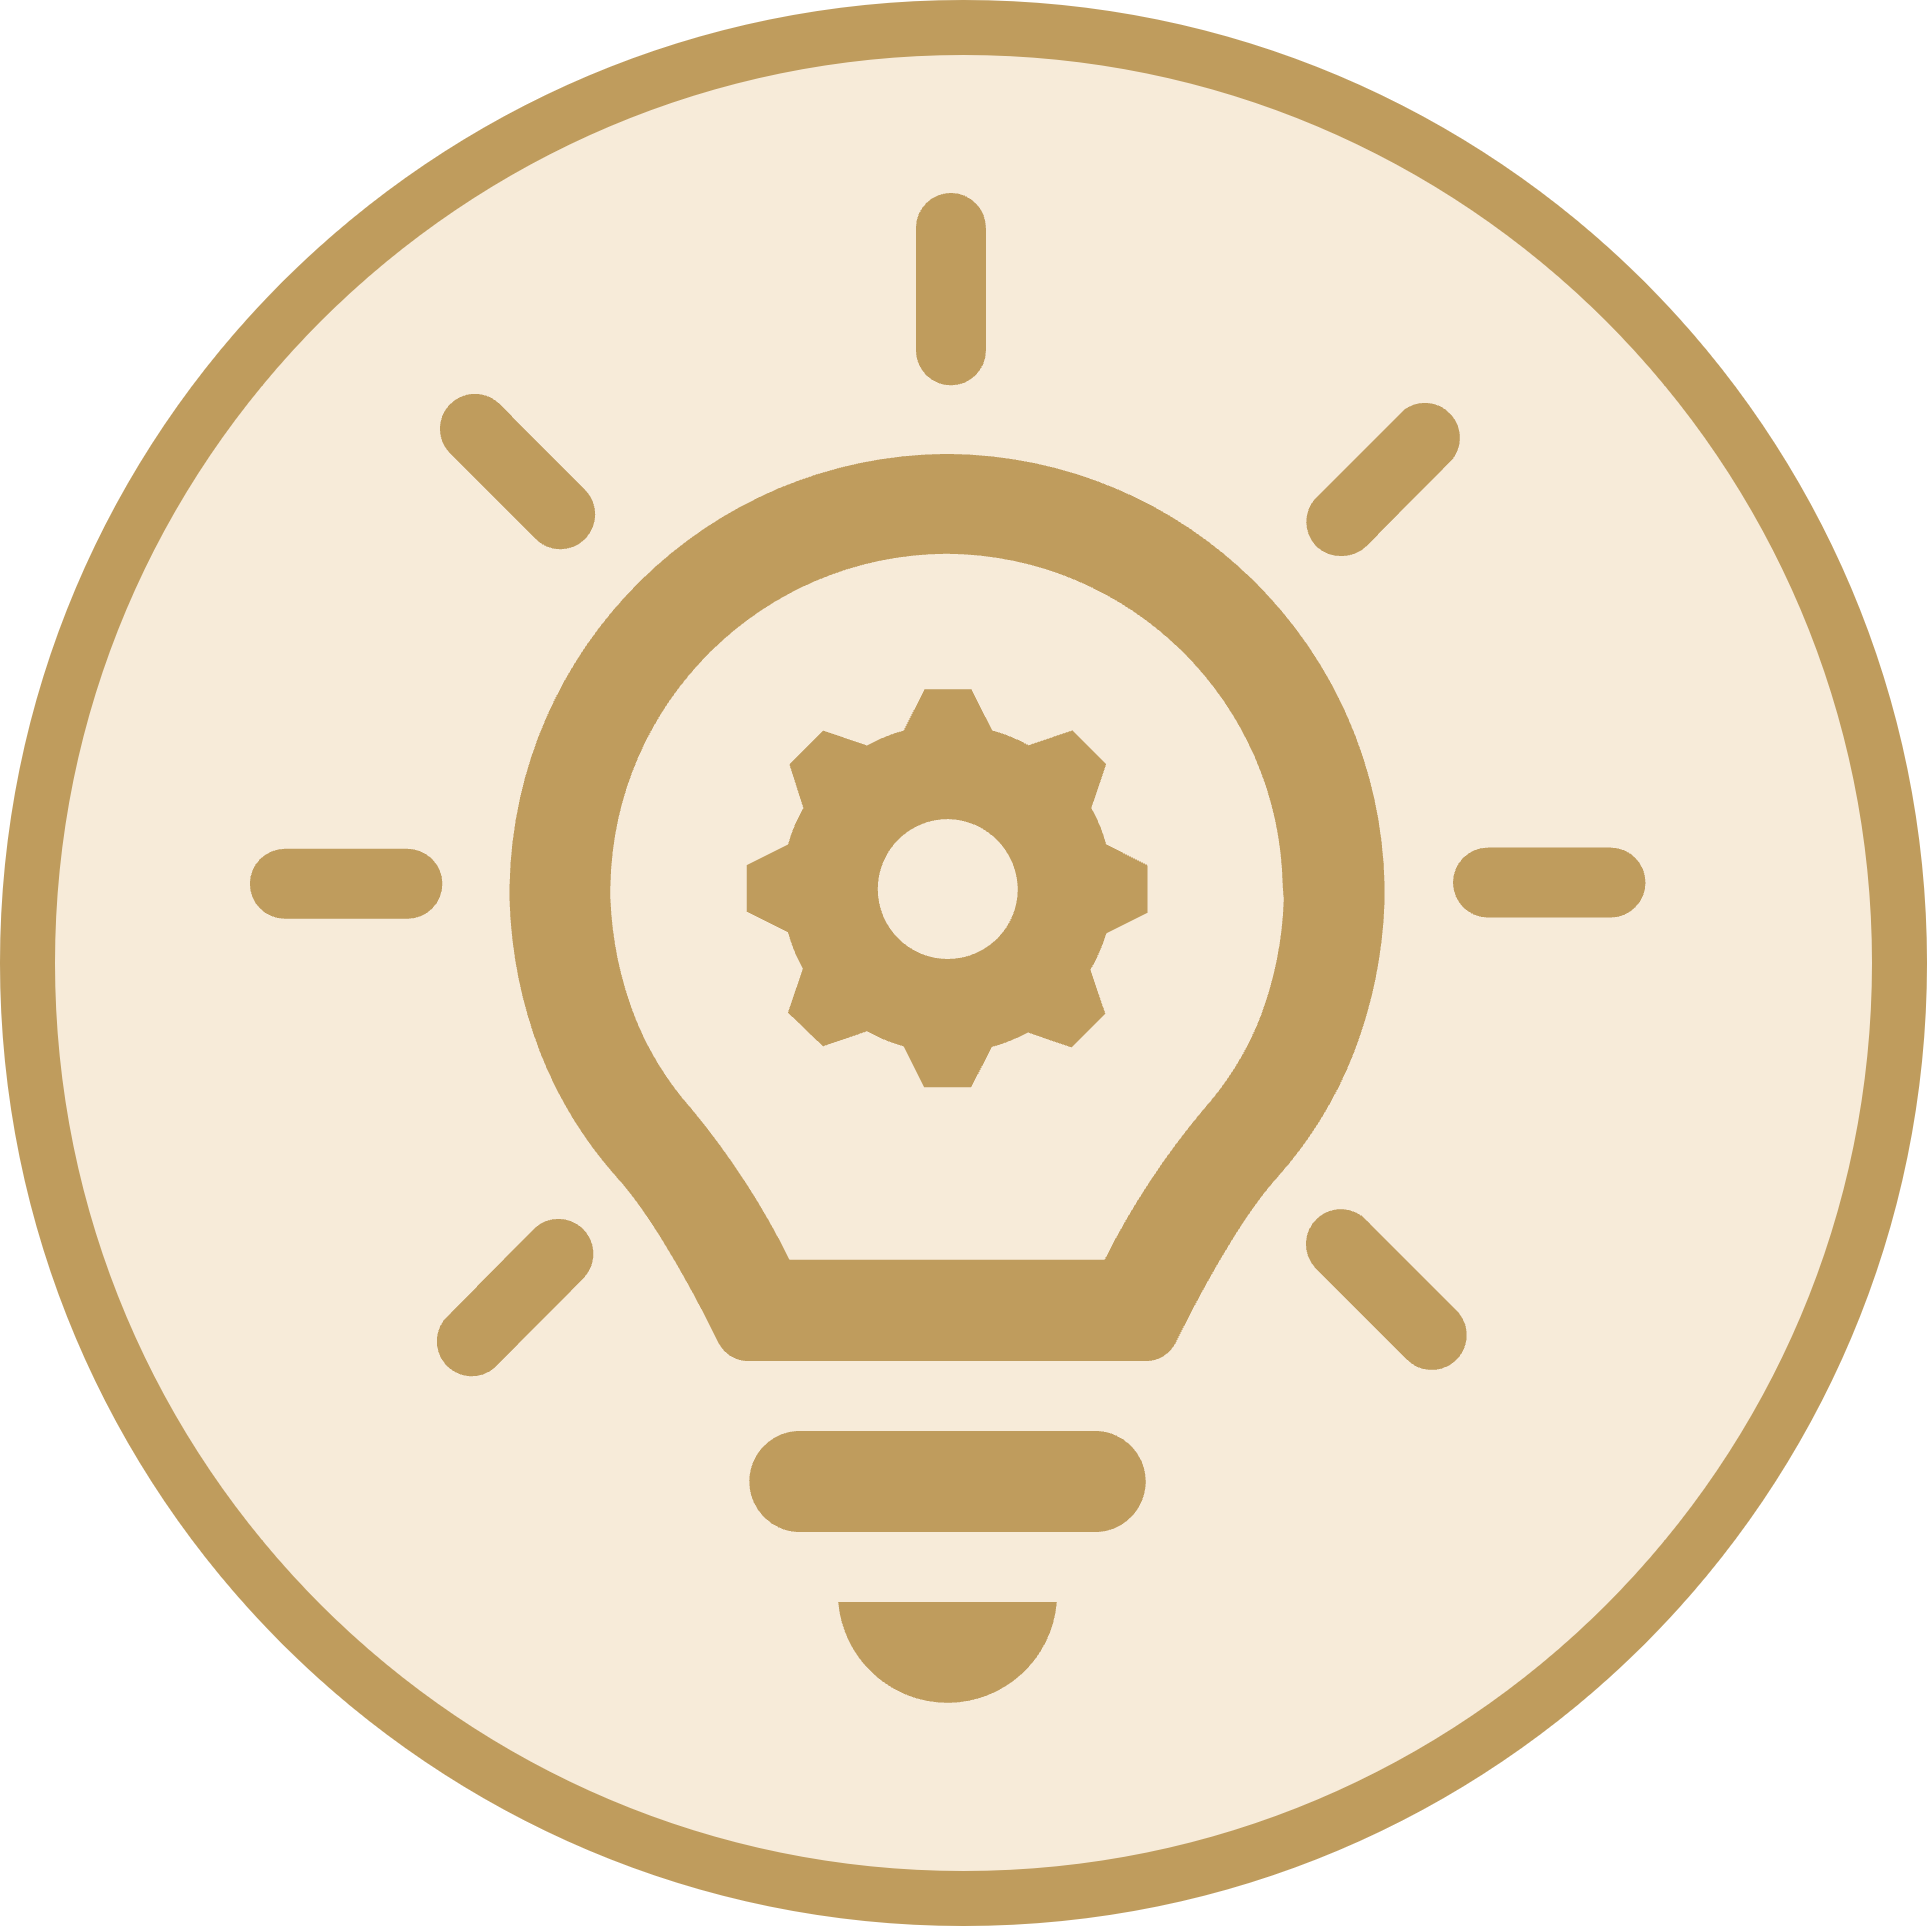 Educational Leadership badge: dark yellow idea lightbulb on a light yellow background